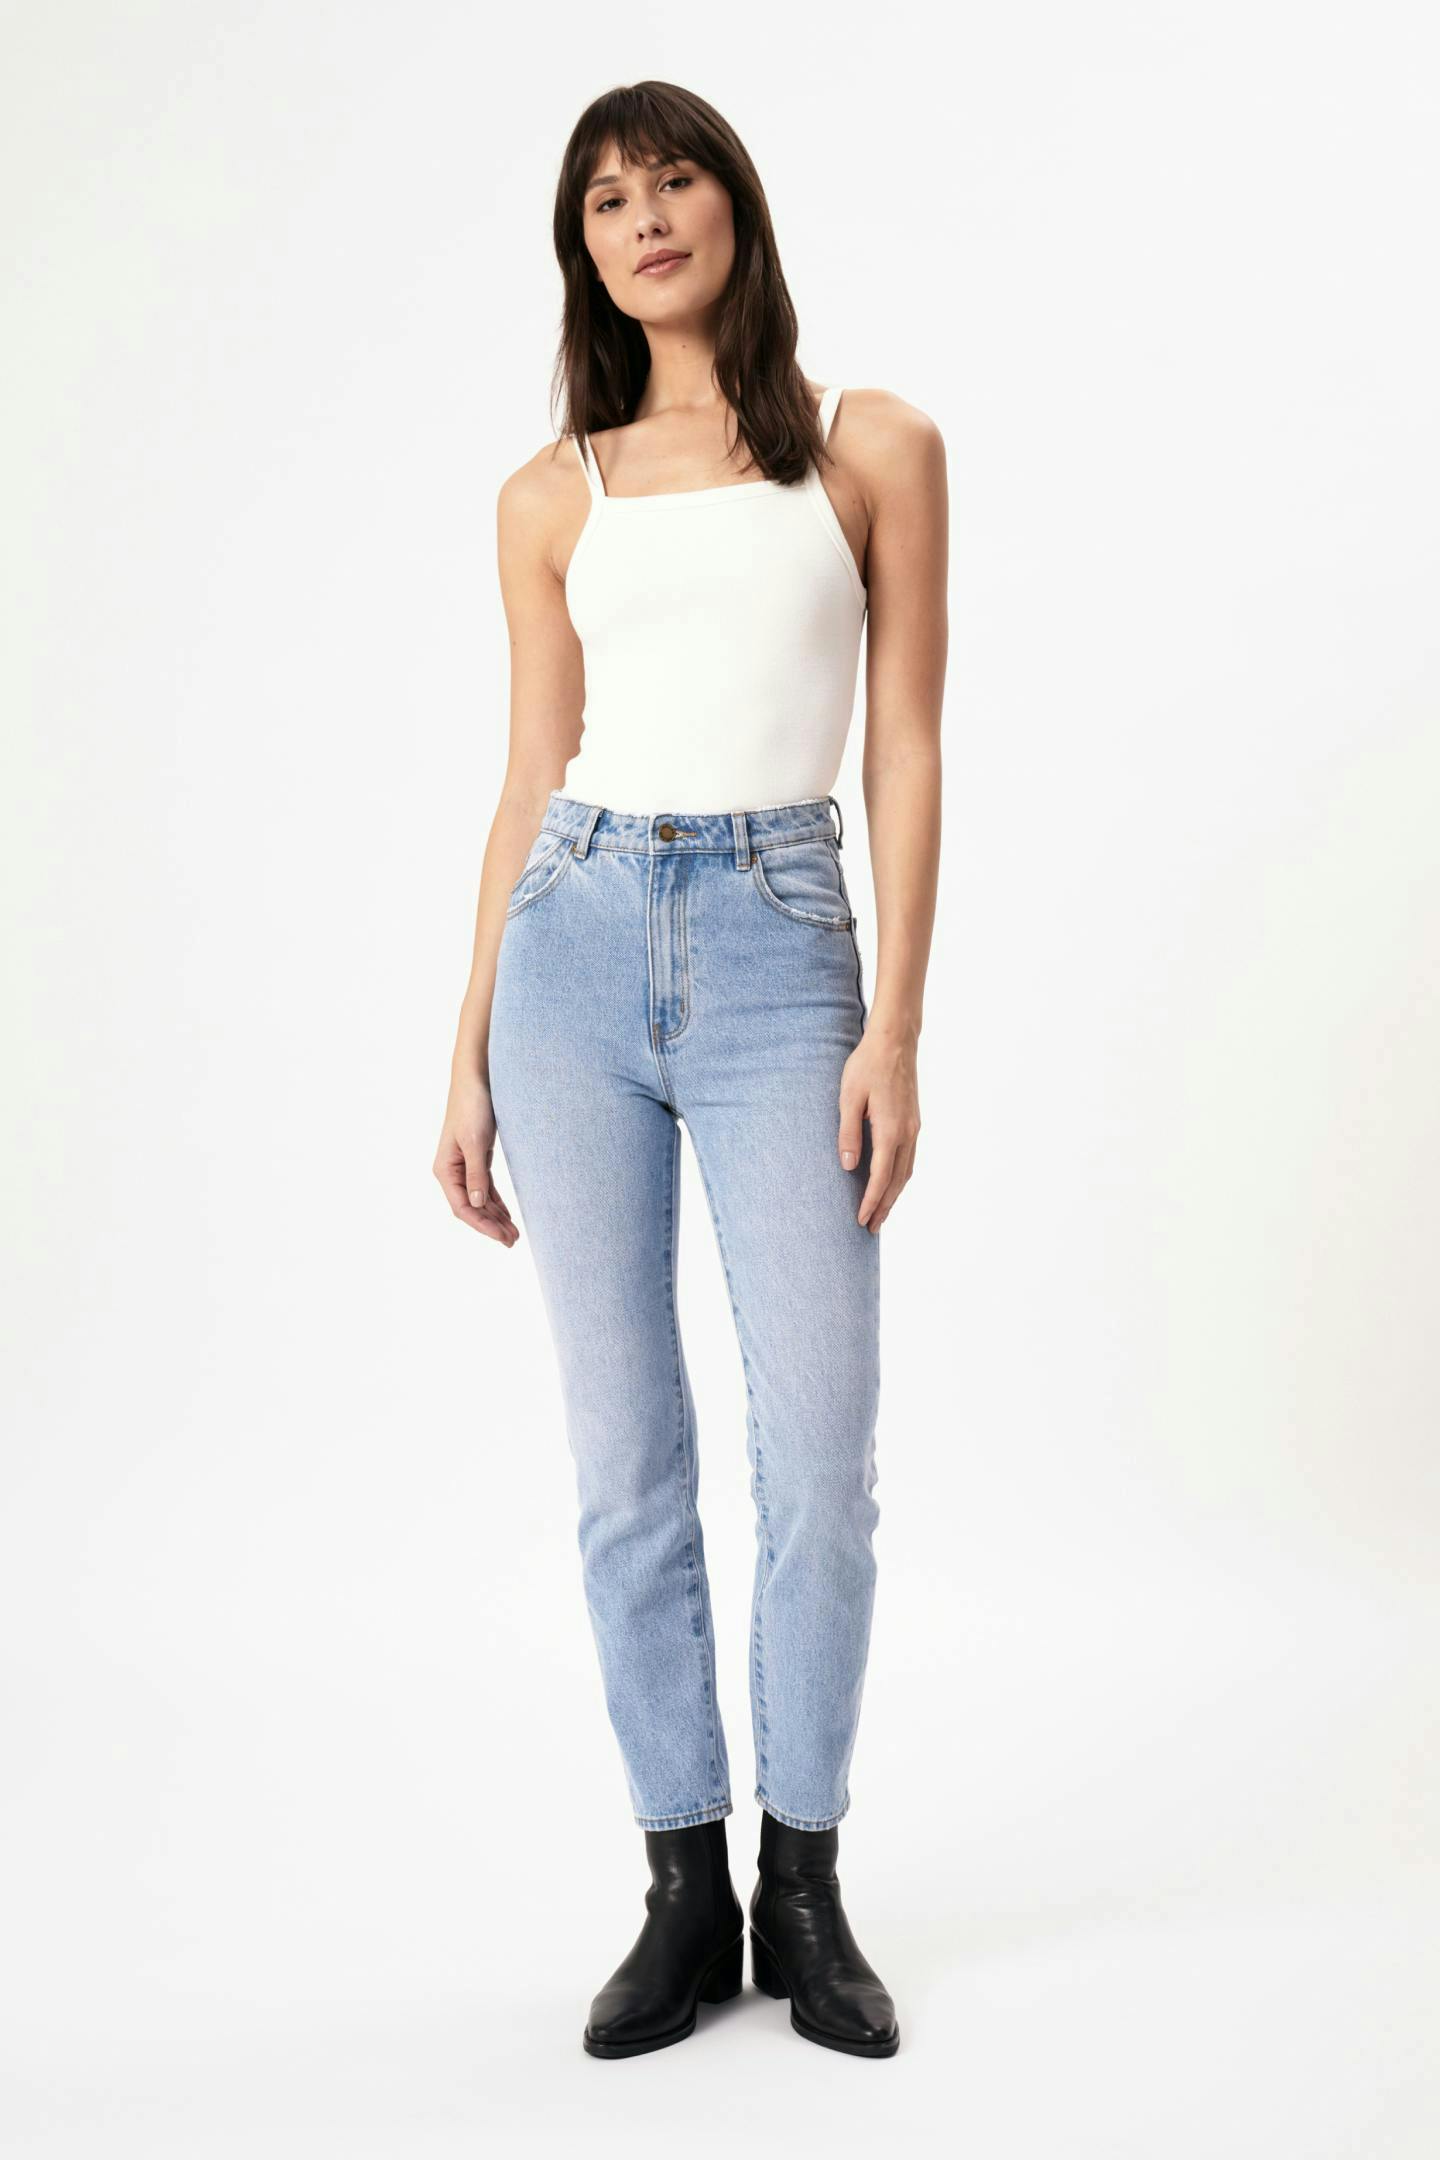 Buy Women's Denim Jeans Online